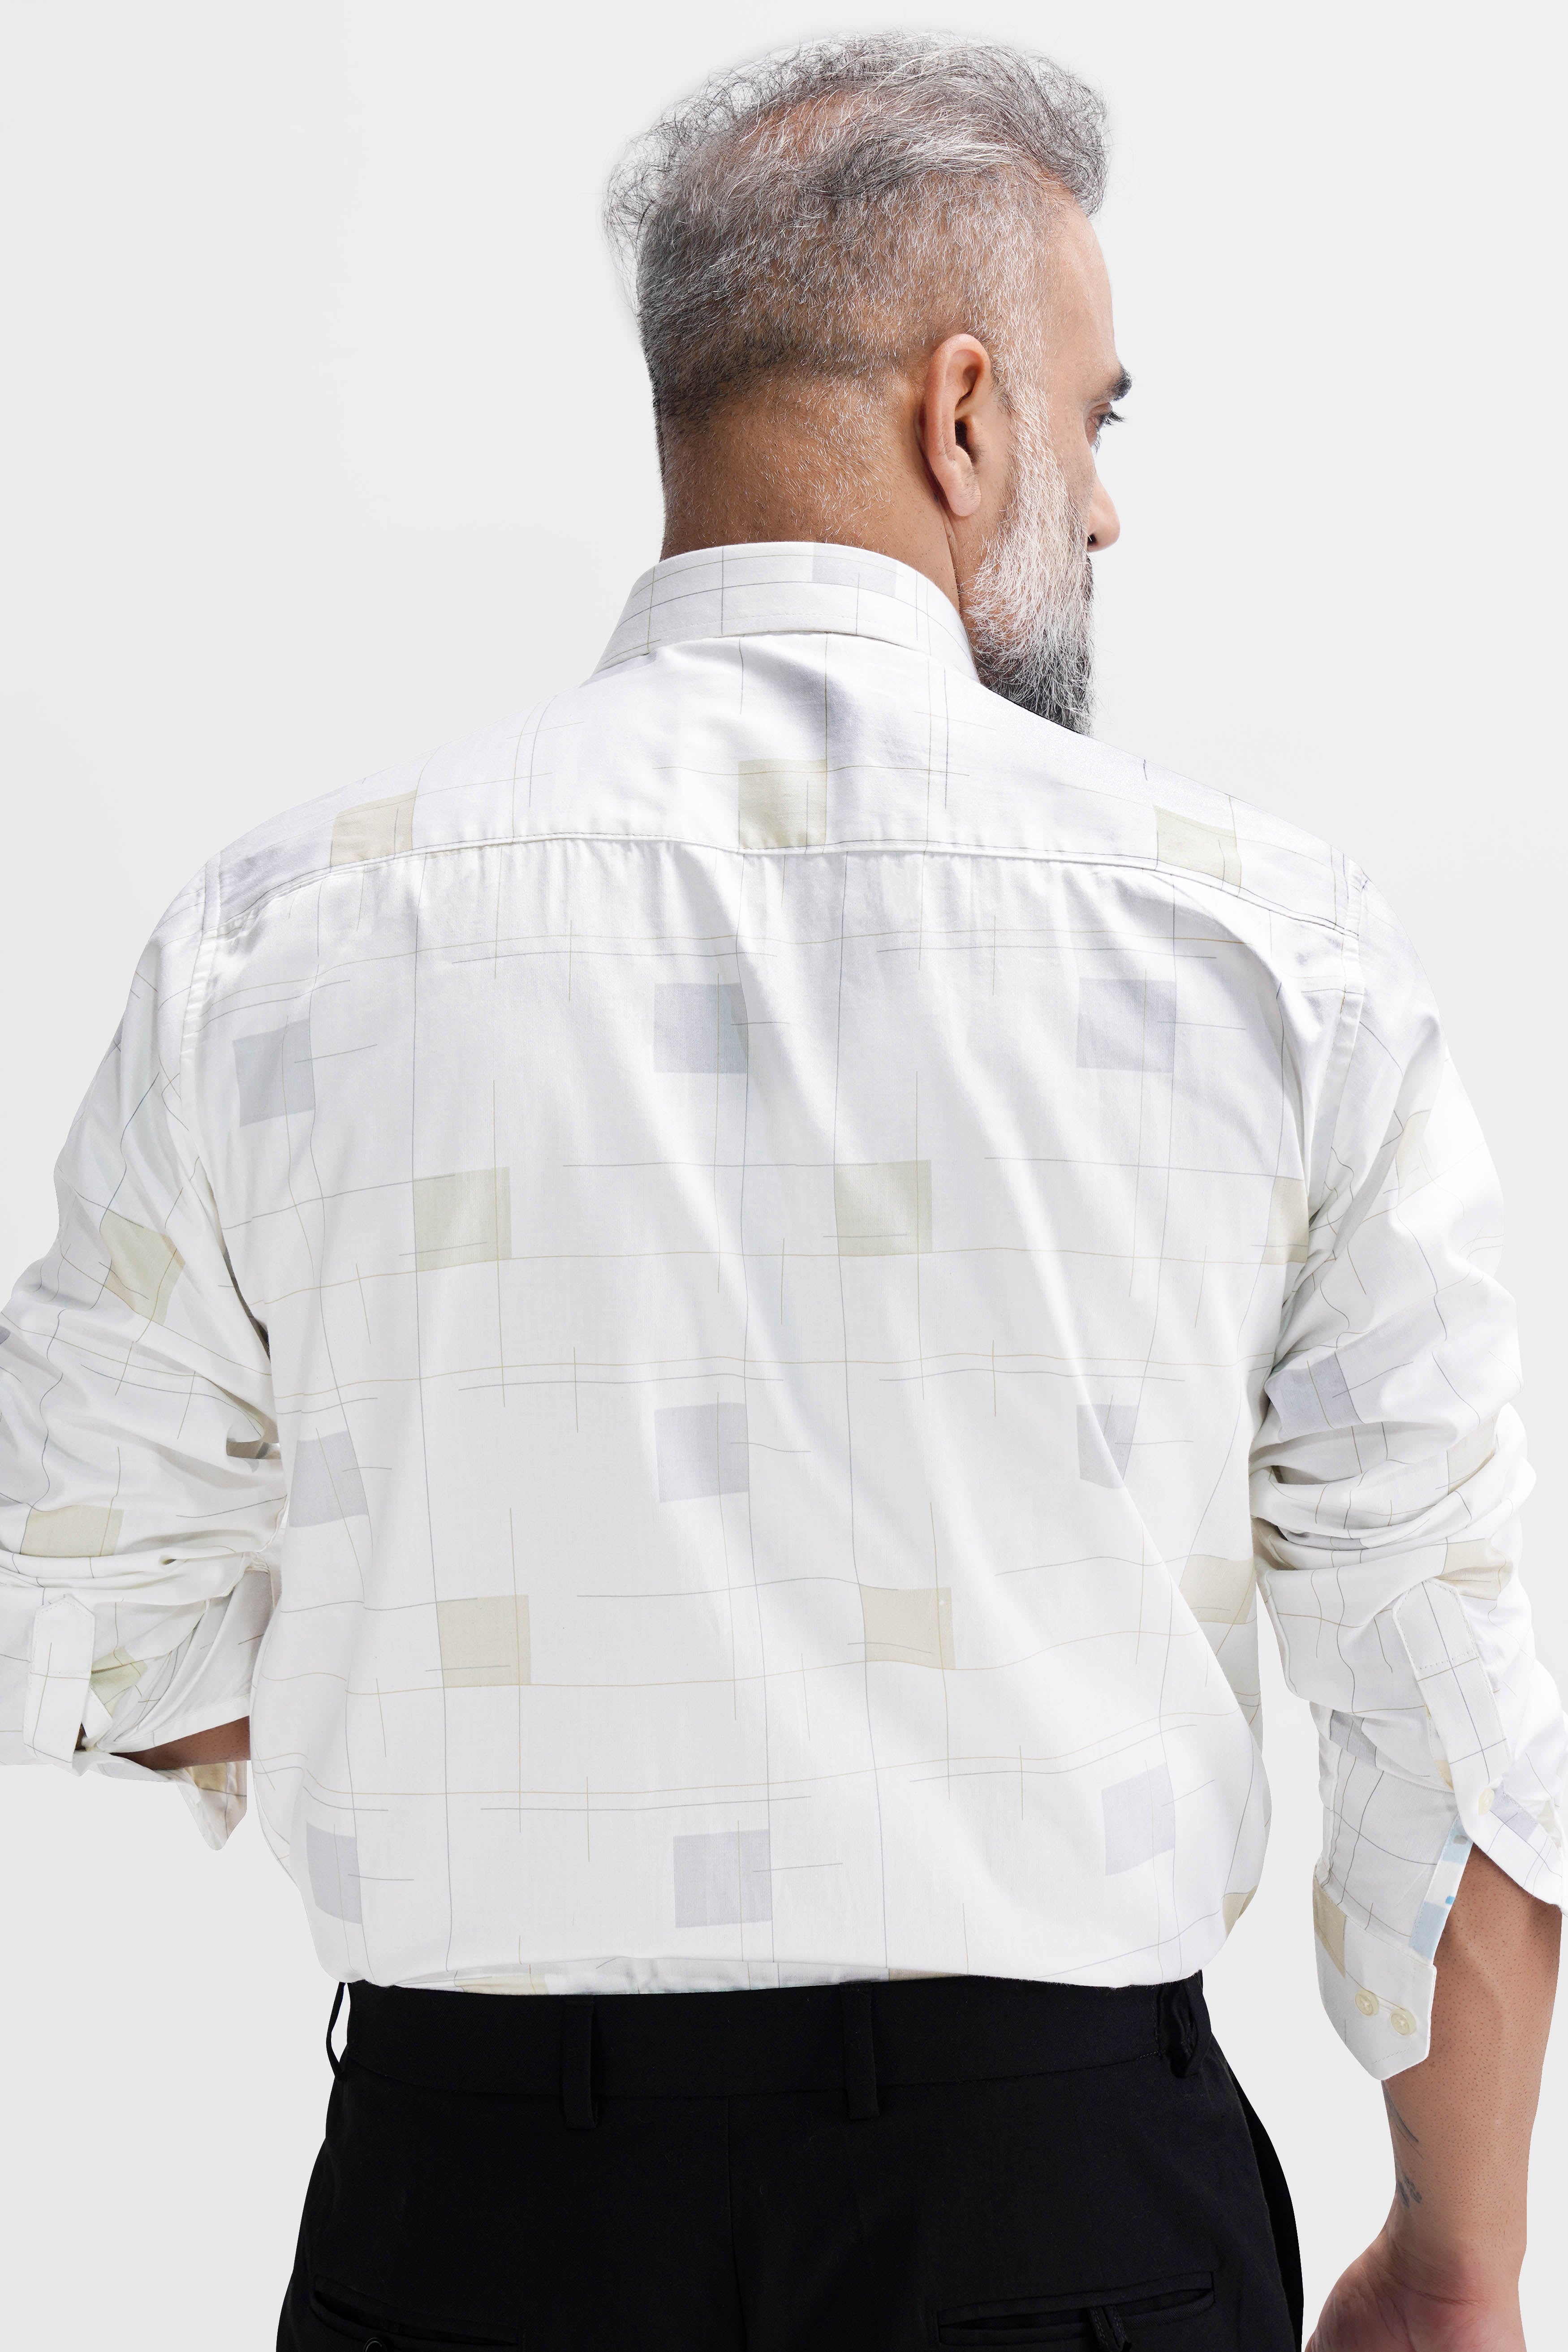 Bright White with Periglacial Beige Checked Jacquard Textured Premium Giza Cotton Shirt